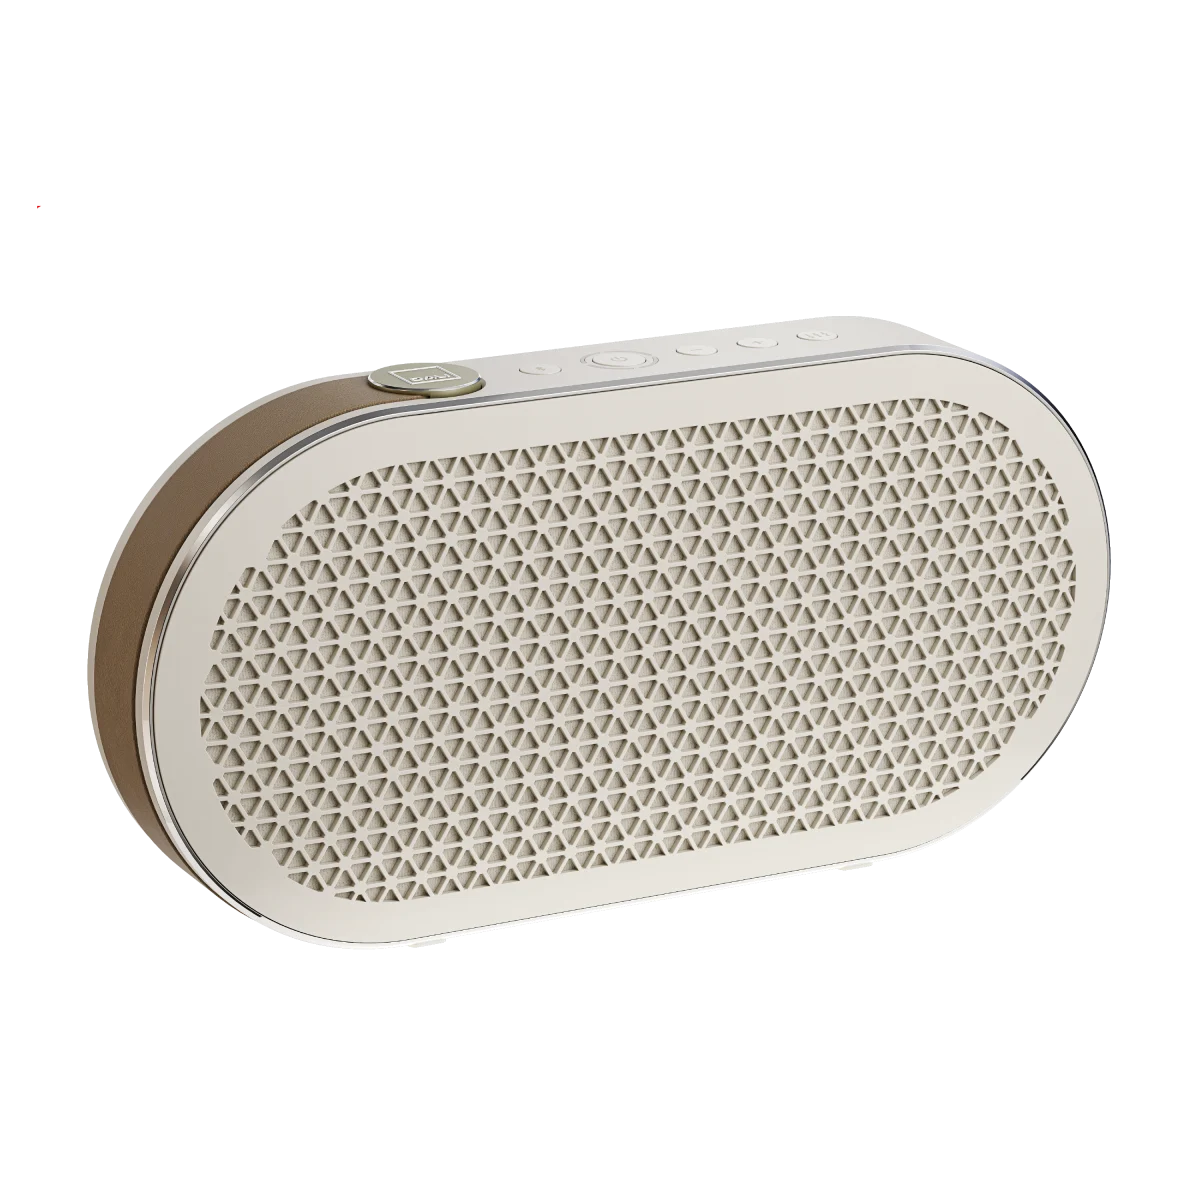 Dali Katch G2 Bluetooth speaker